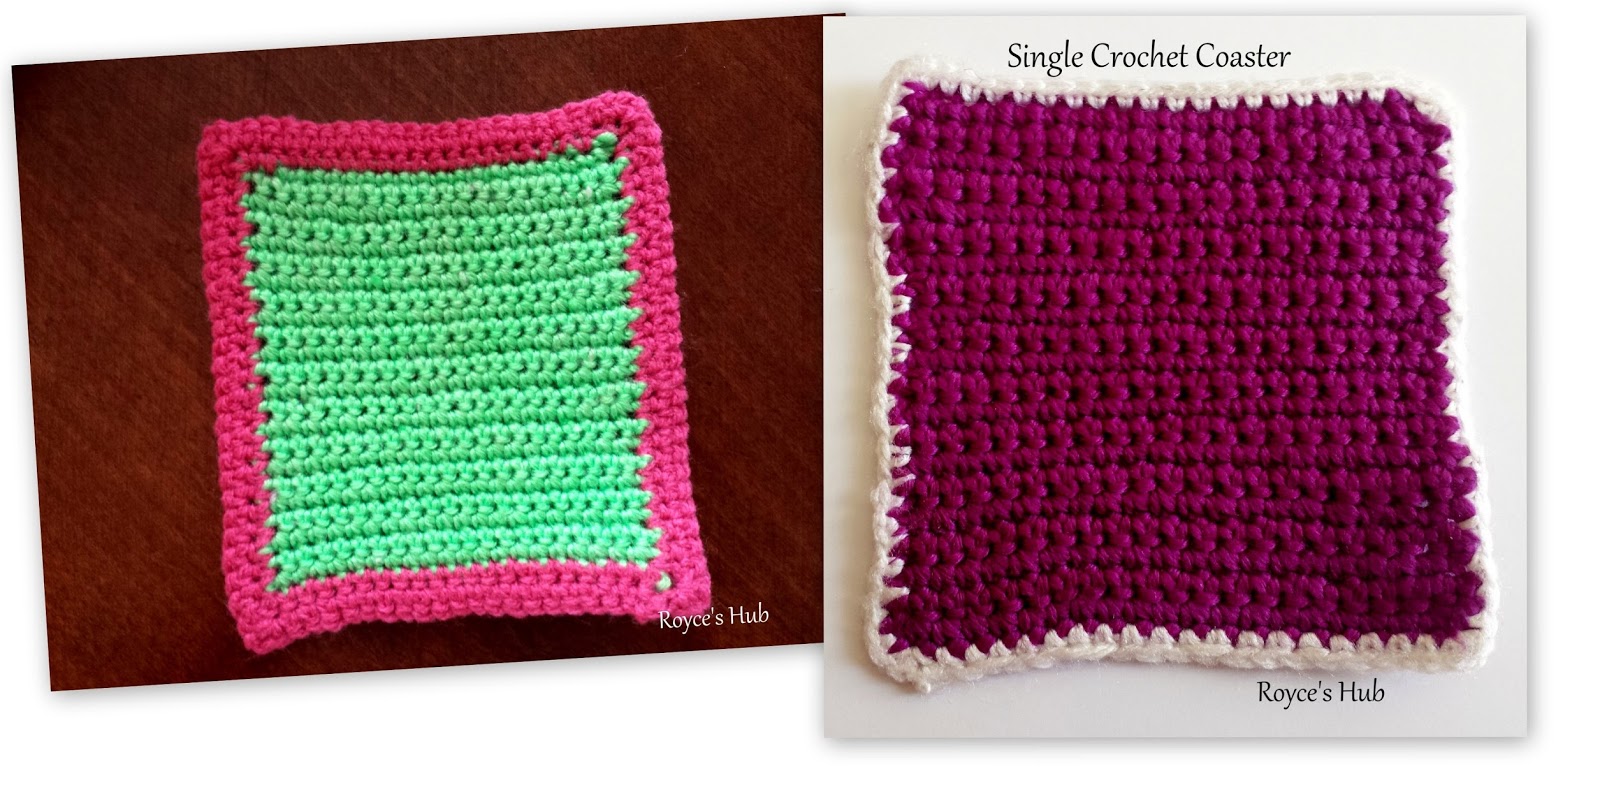 http://jessieathome.com/2014/10/basic-single-crochet-coaster.html